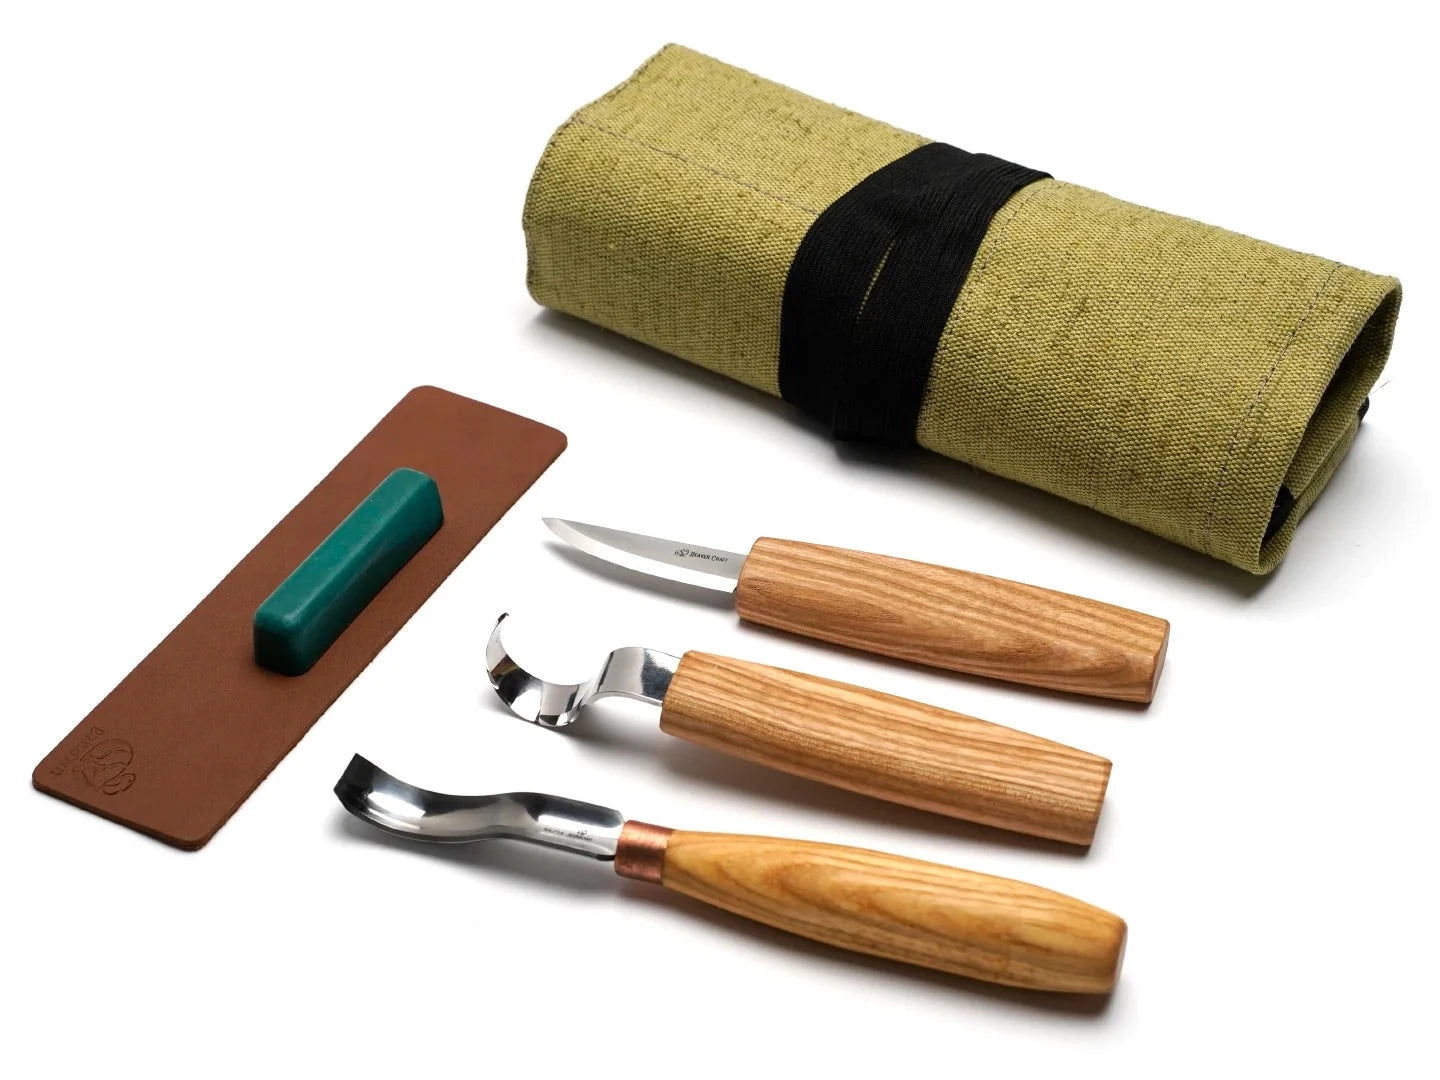 Beginner starting wood carving tools kit & set - BeaverCraft